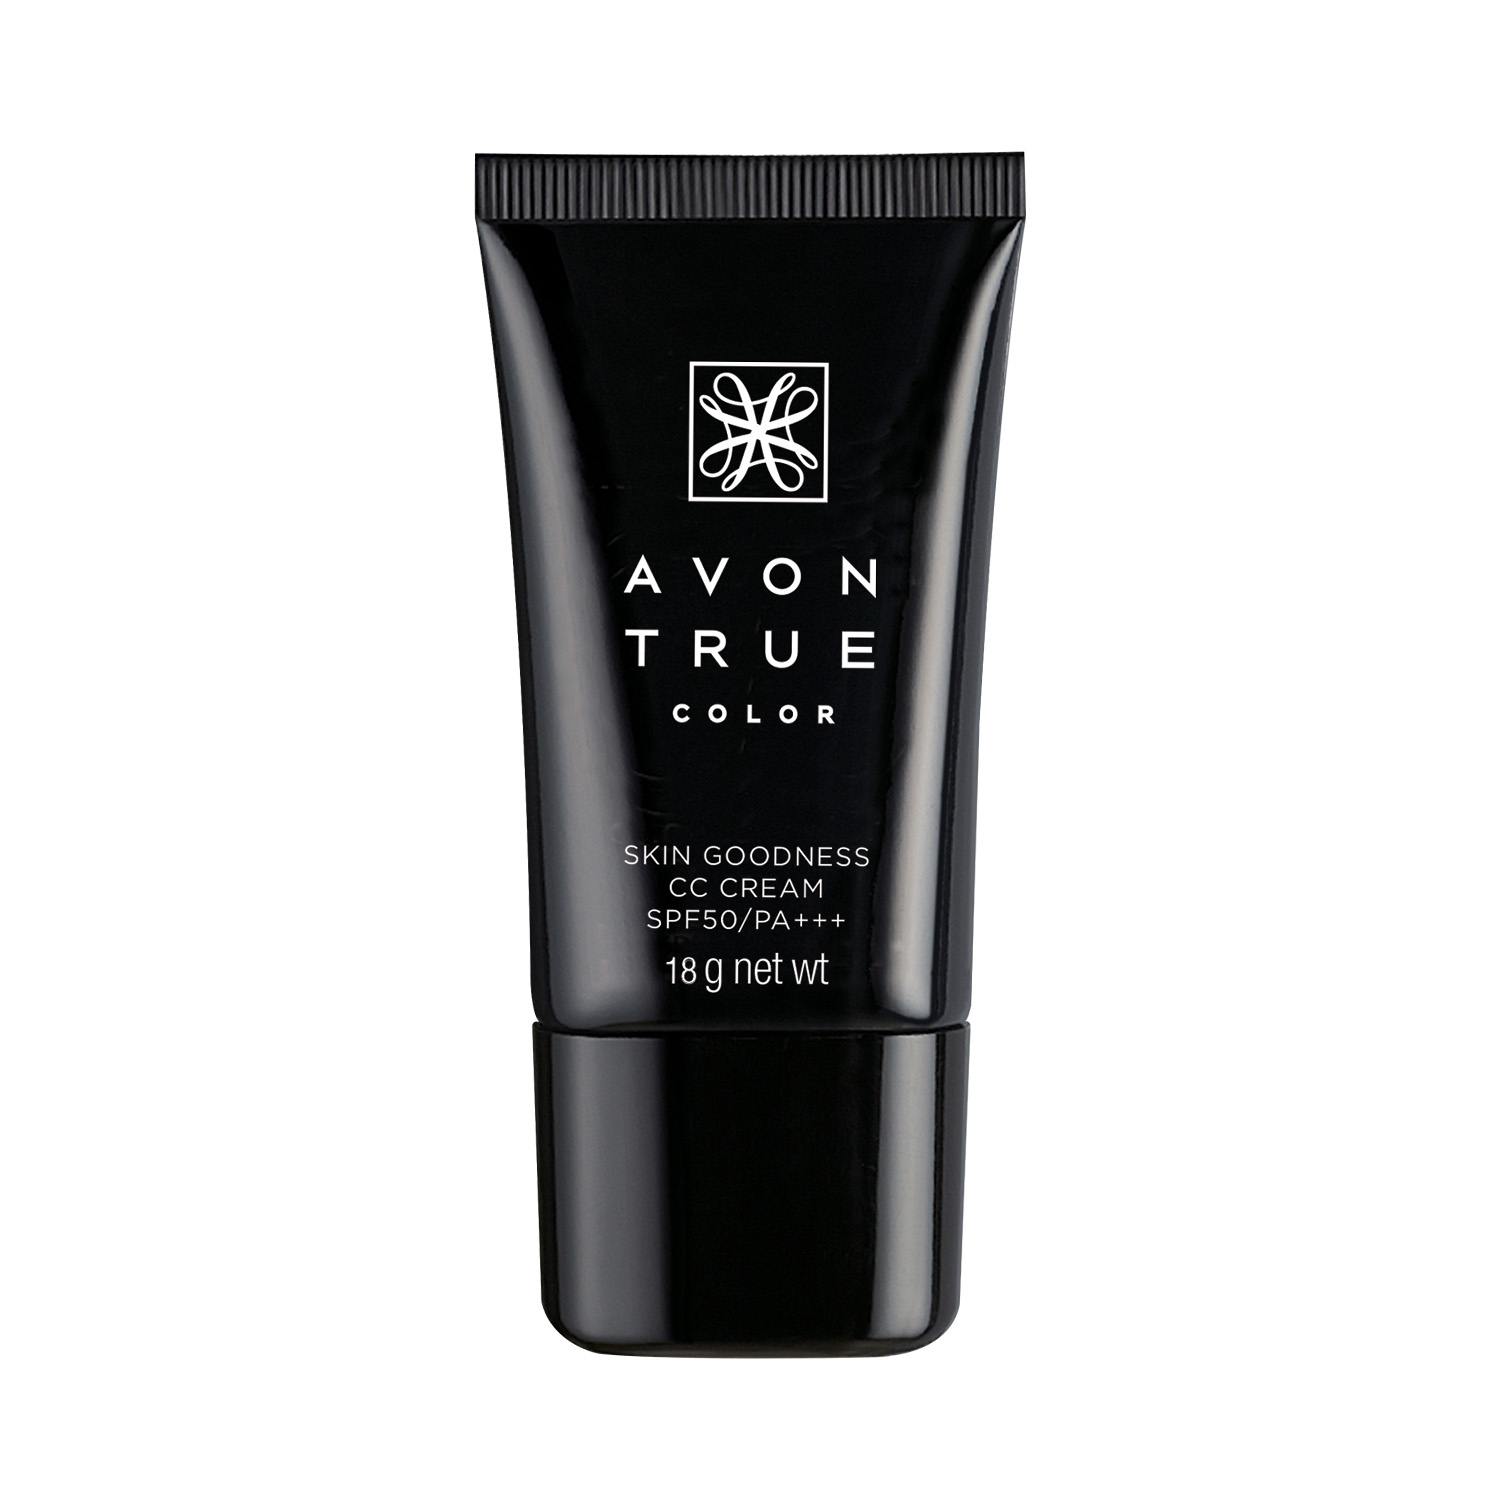 Avon True Color Skin Goodness CC Cream SPF 50 - Medium Wheat (18g)